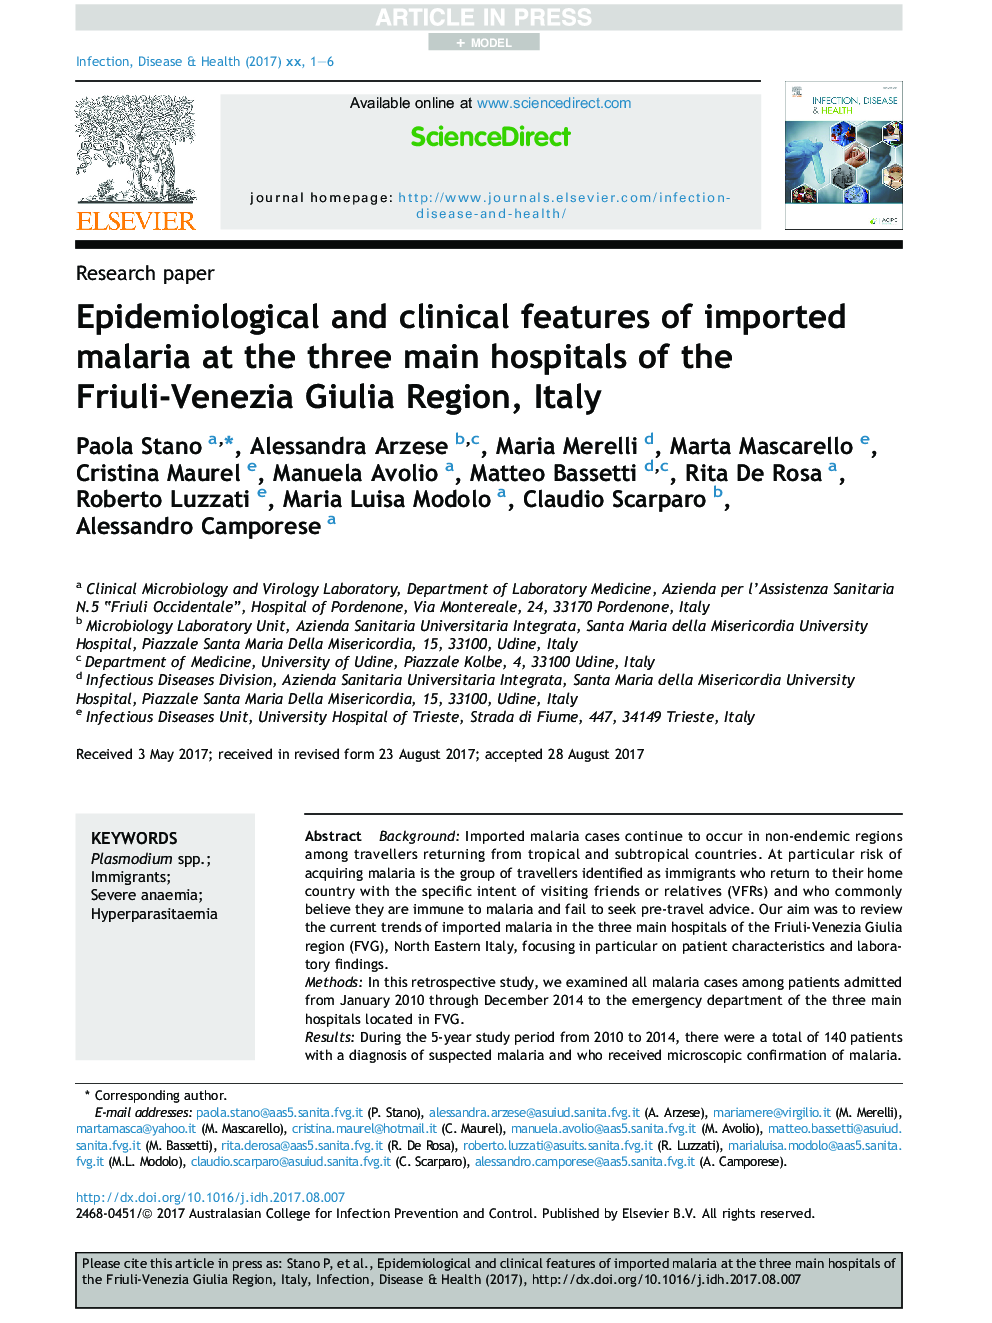 Epidemiological and clinical features of imported malaria at the three main hospitals of the Friuli-Venezia Giulia Region, Italy